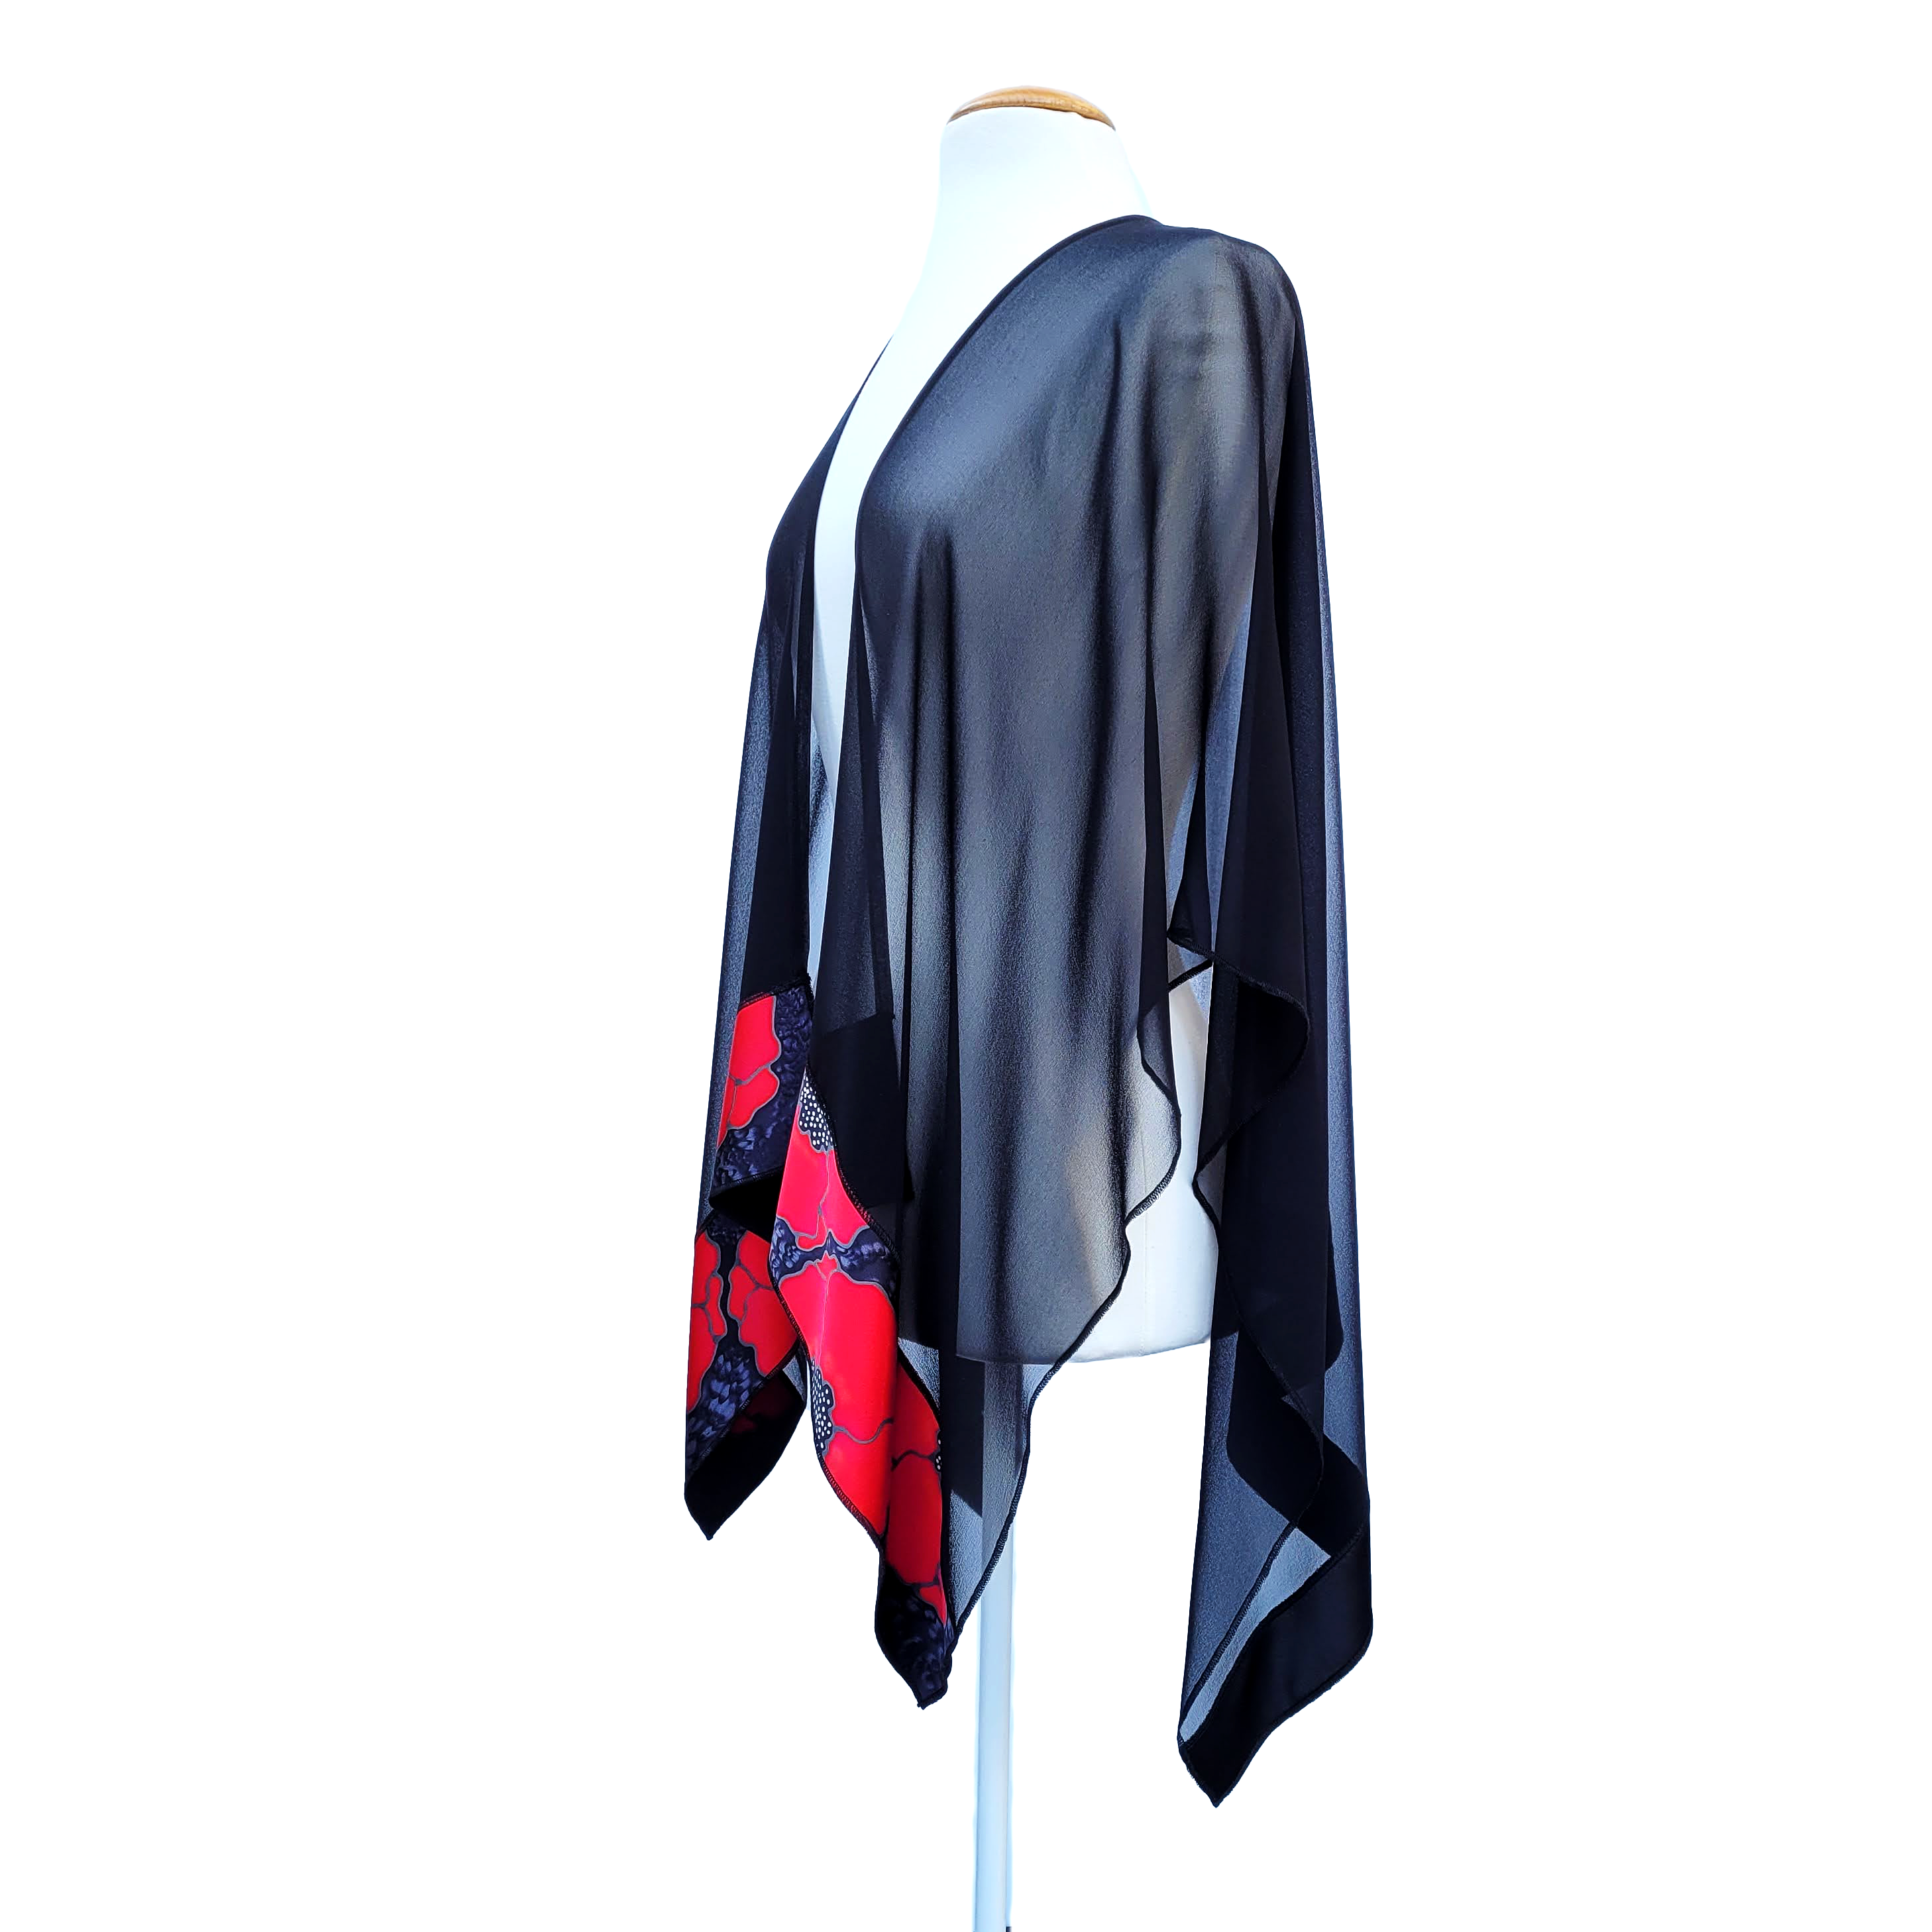 pure silk sheer black silk shawl handpainted red poppies art design handmade by Lynne Kiel